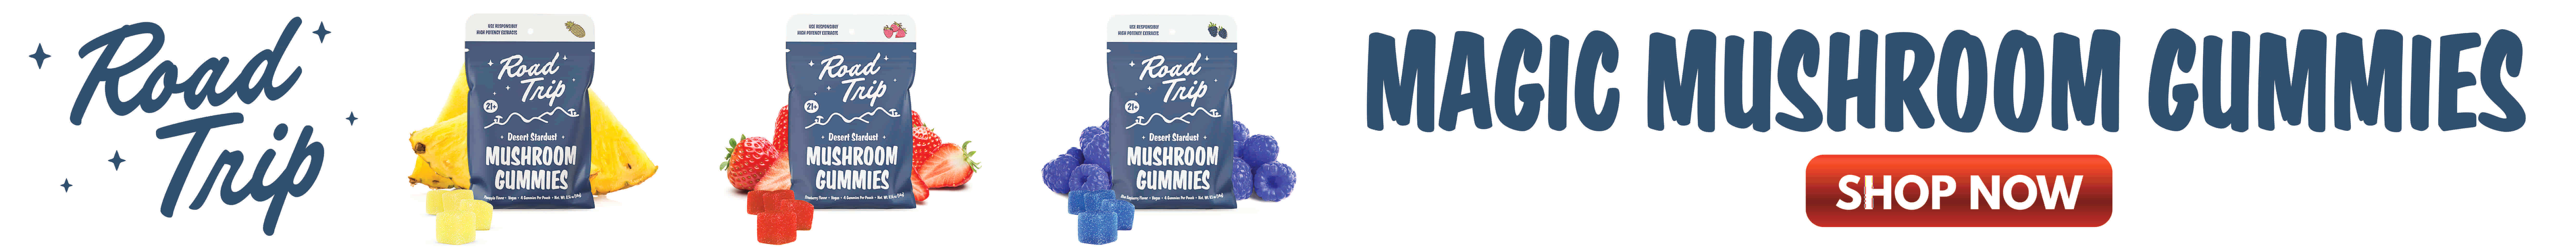 Road Trip Magic Mushroom Gummies